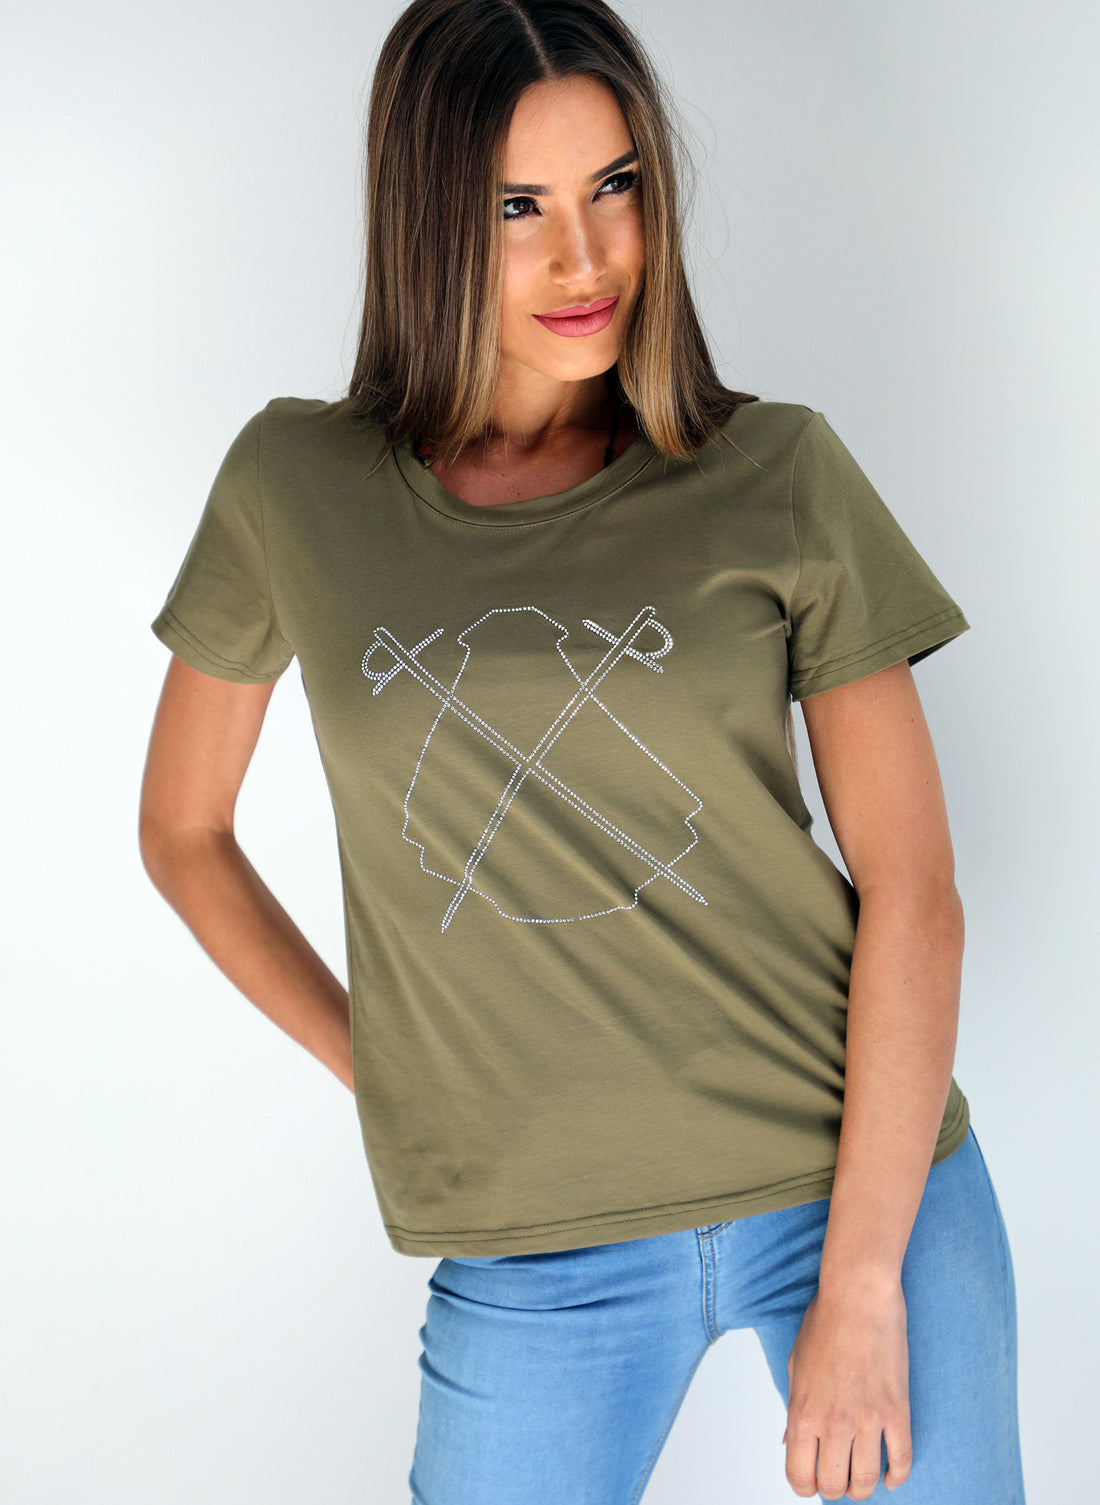 T-shirt Femme Kaki Capote Vert